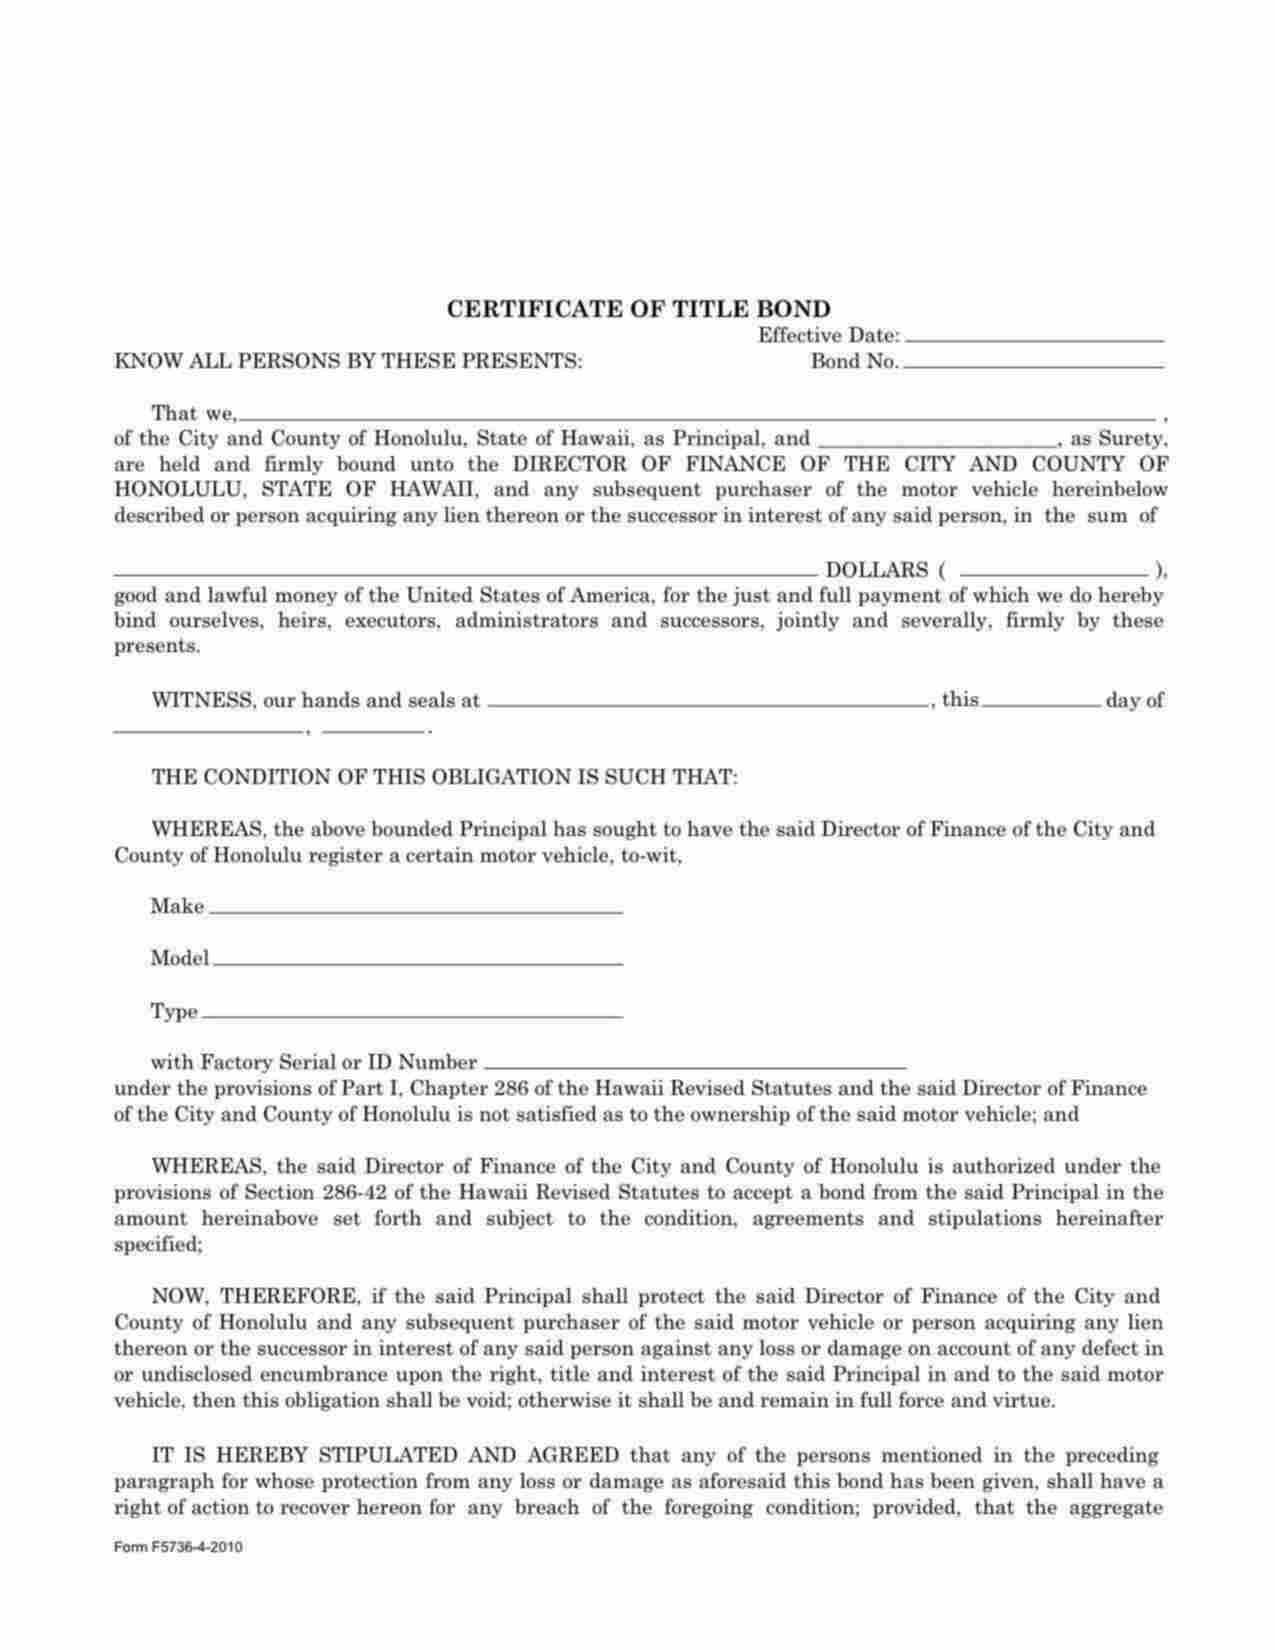 Hawaii Motor Vehicle Certificate of Title Bond Form